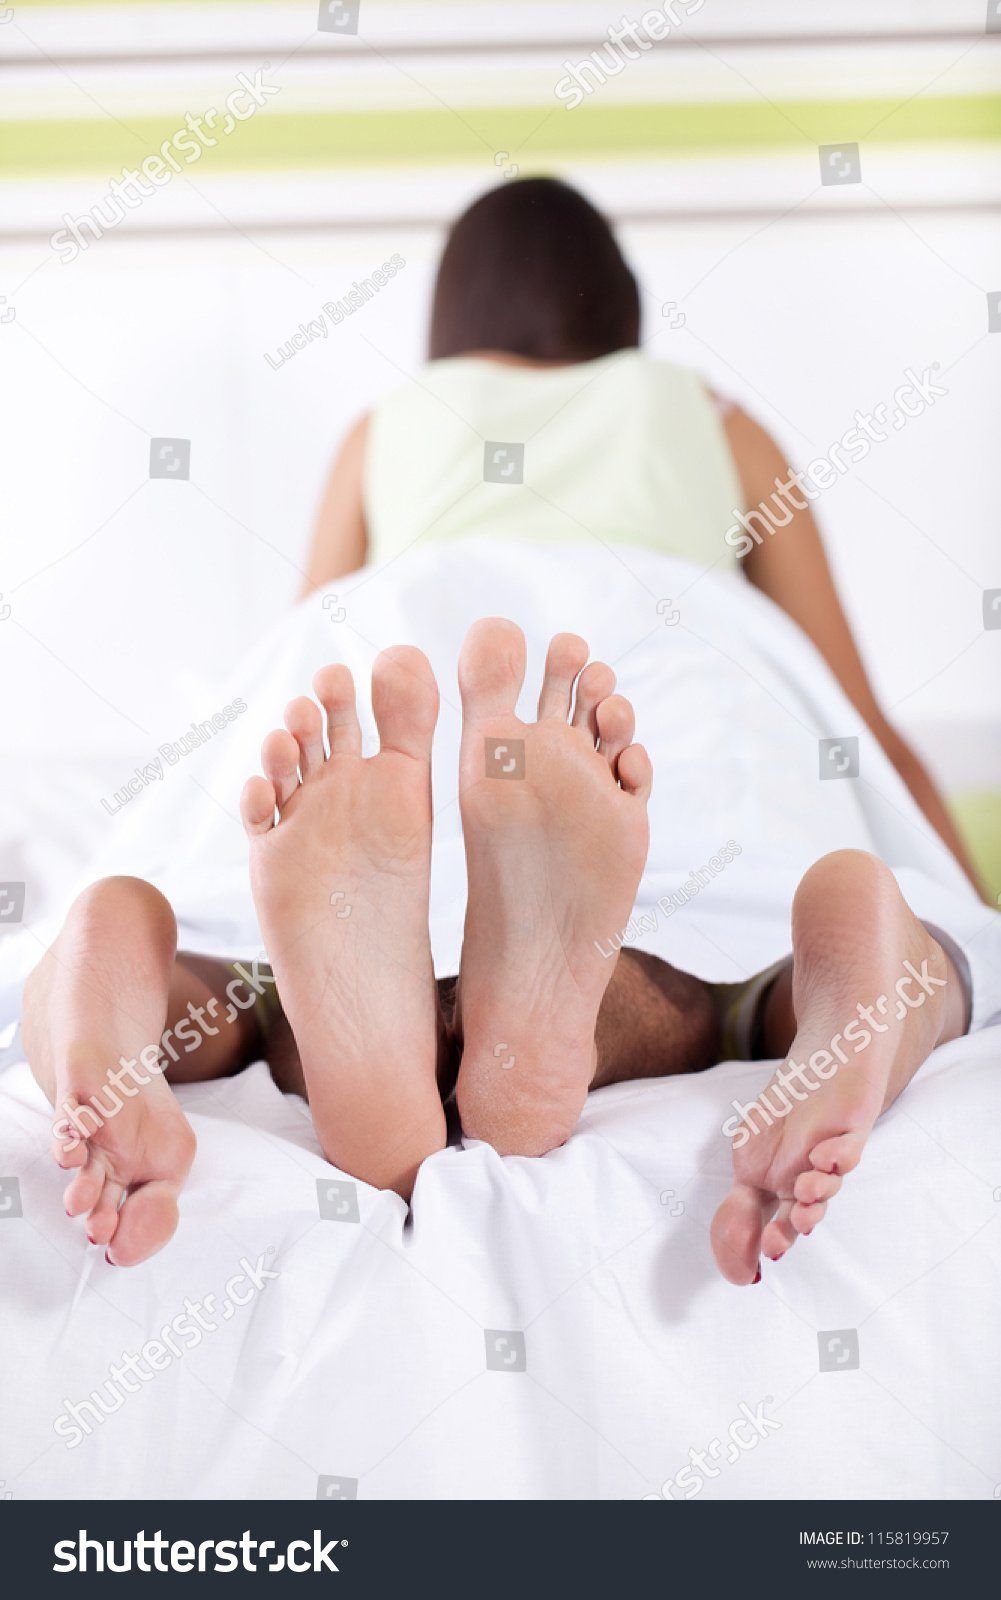 Foot phtos during sex